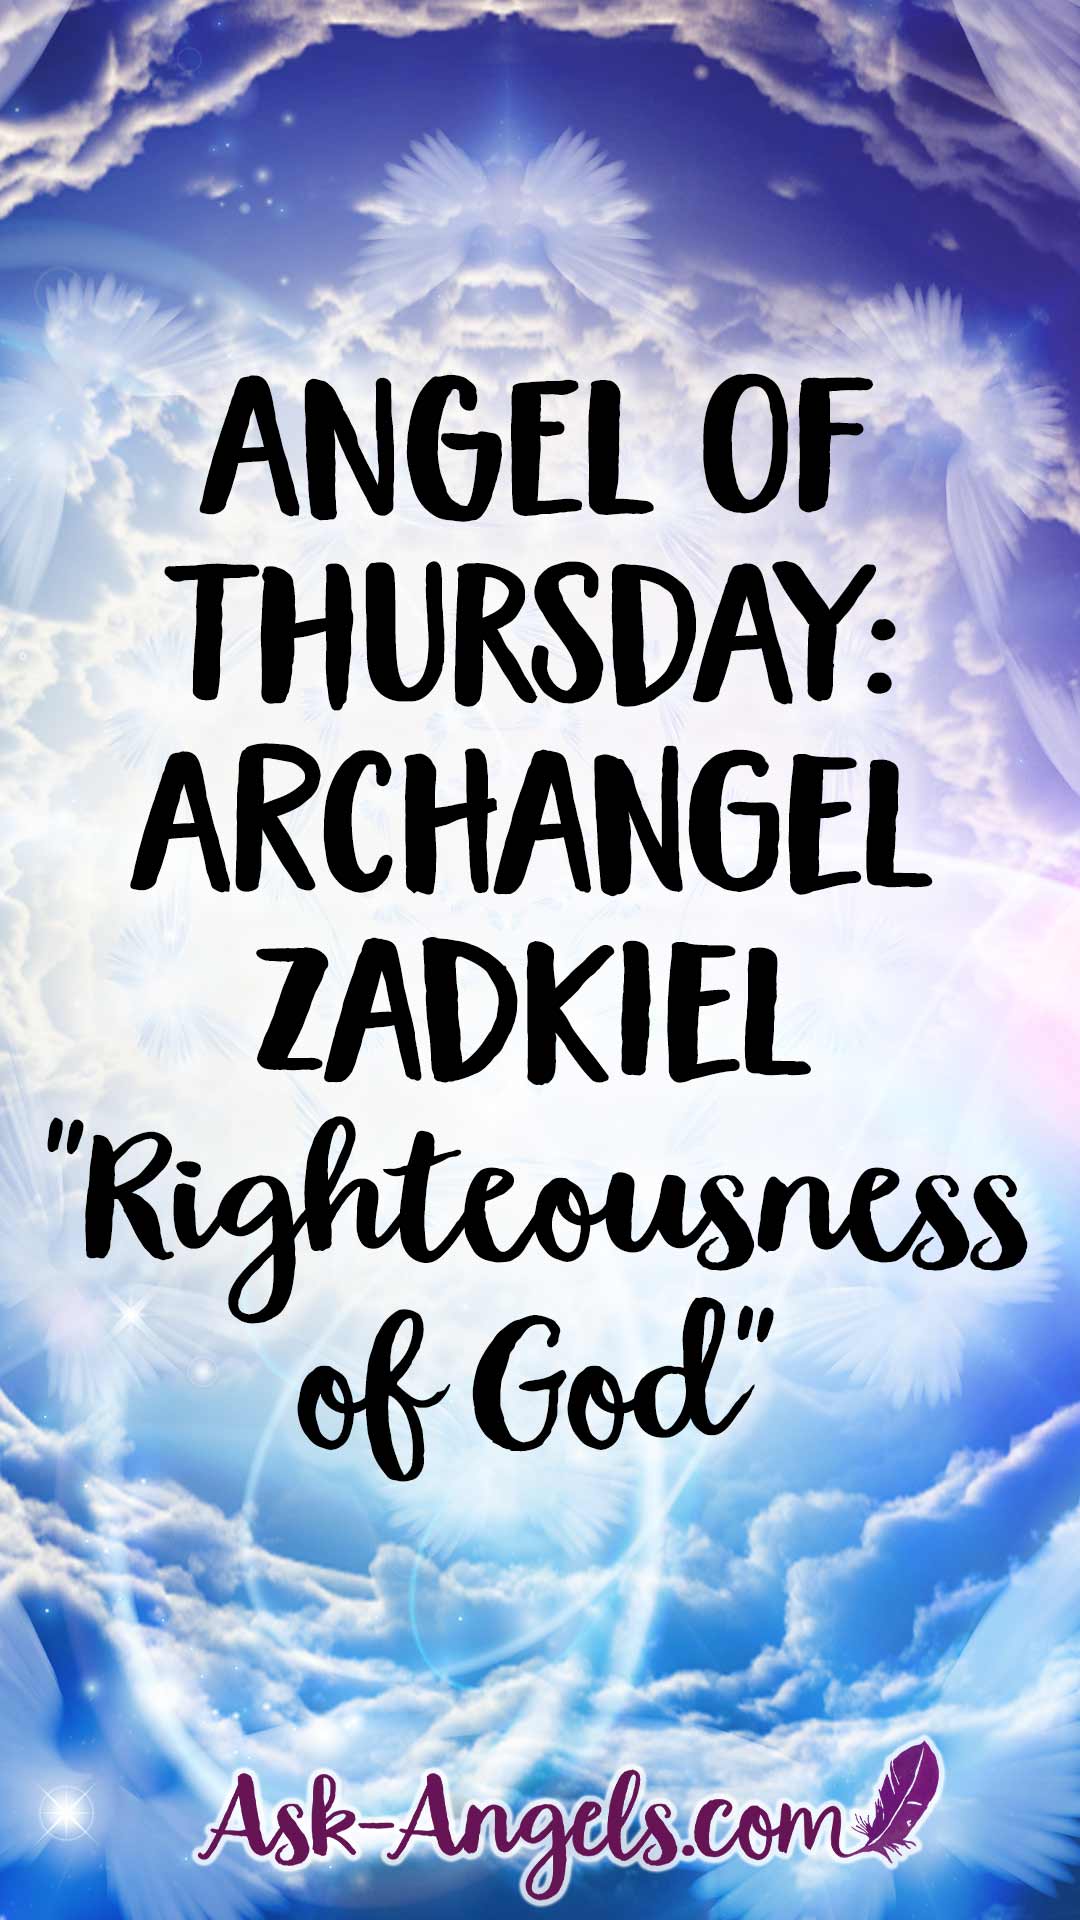 Angel of Thursday: Archangel Zadkiel - Righteousness of God